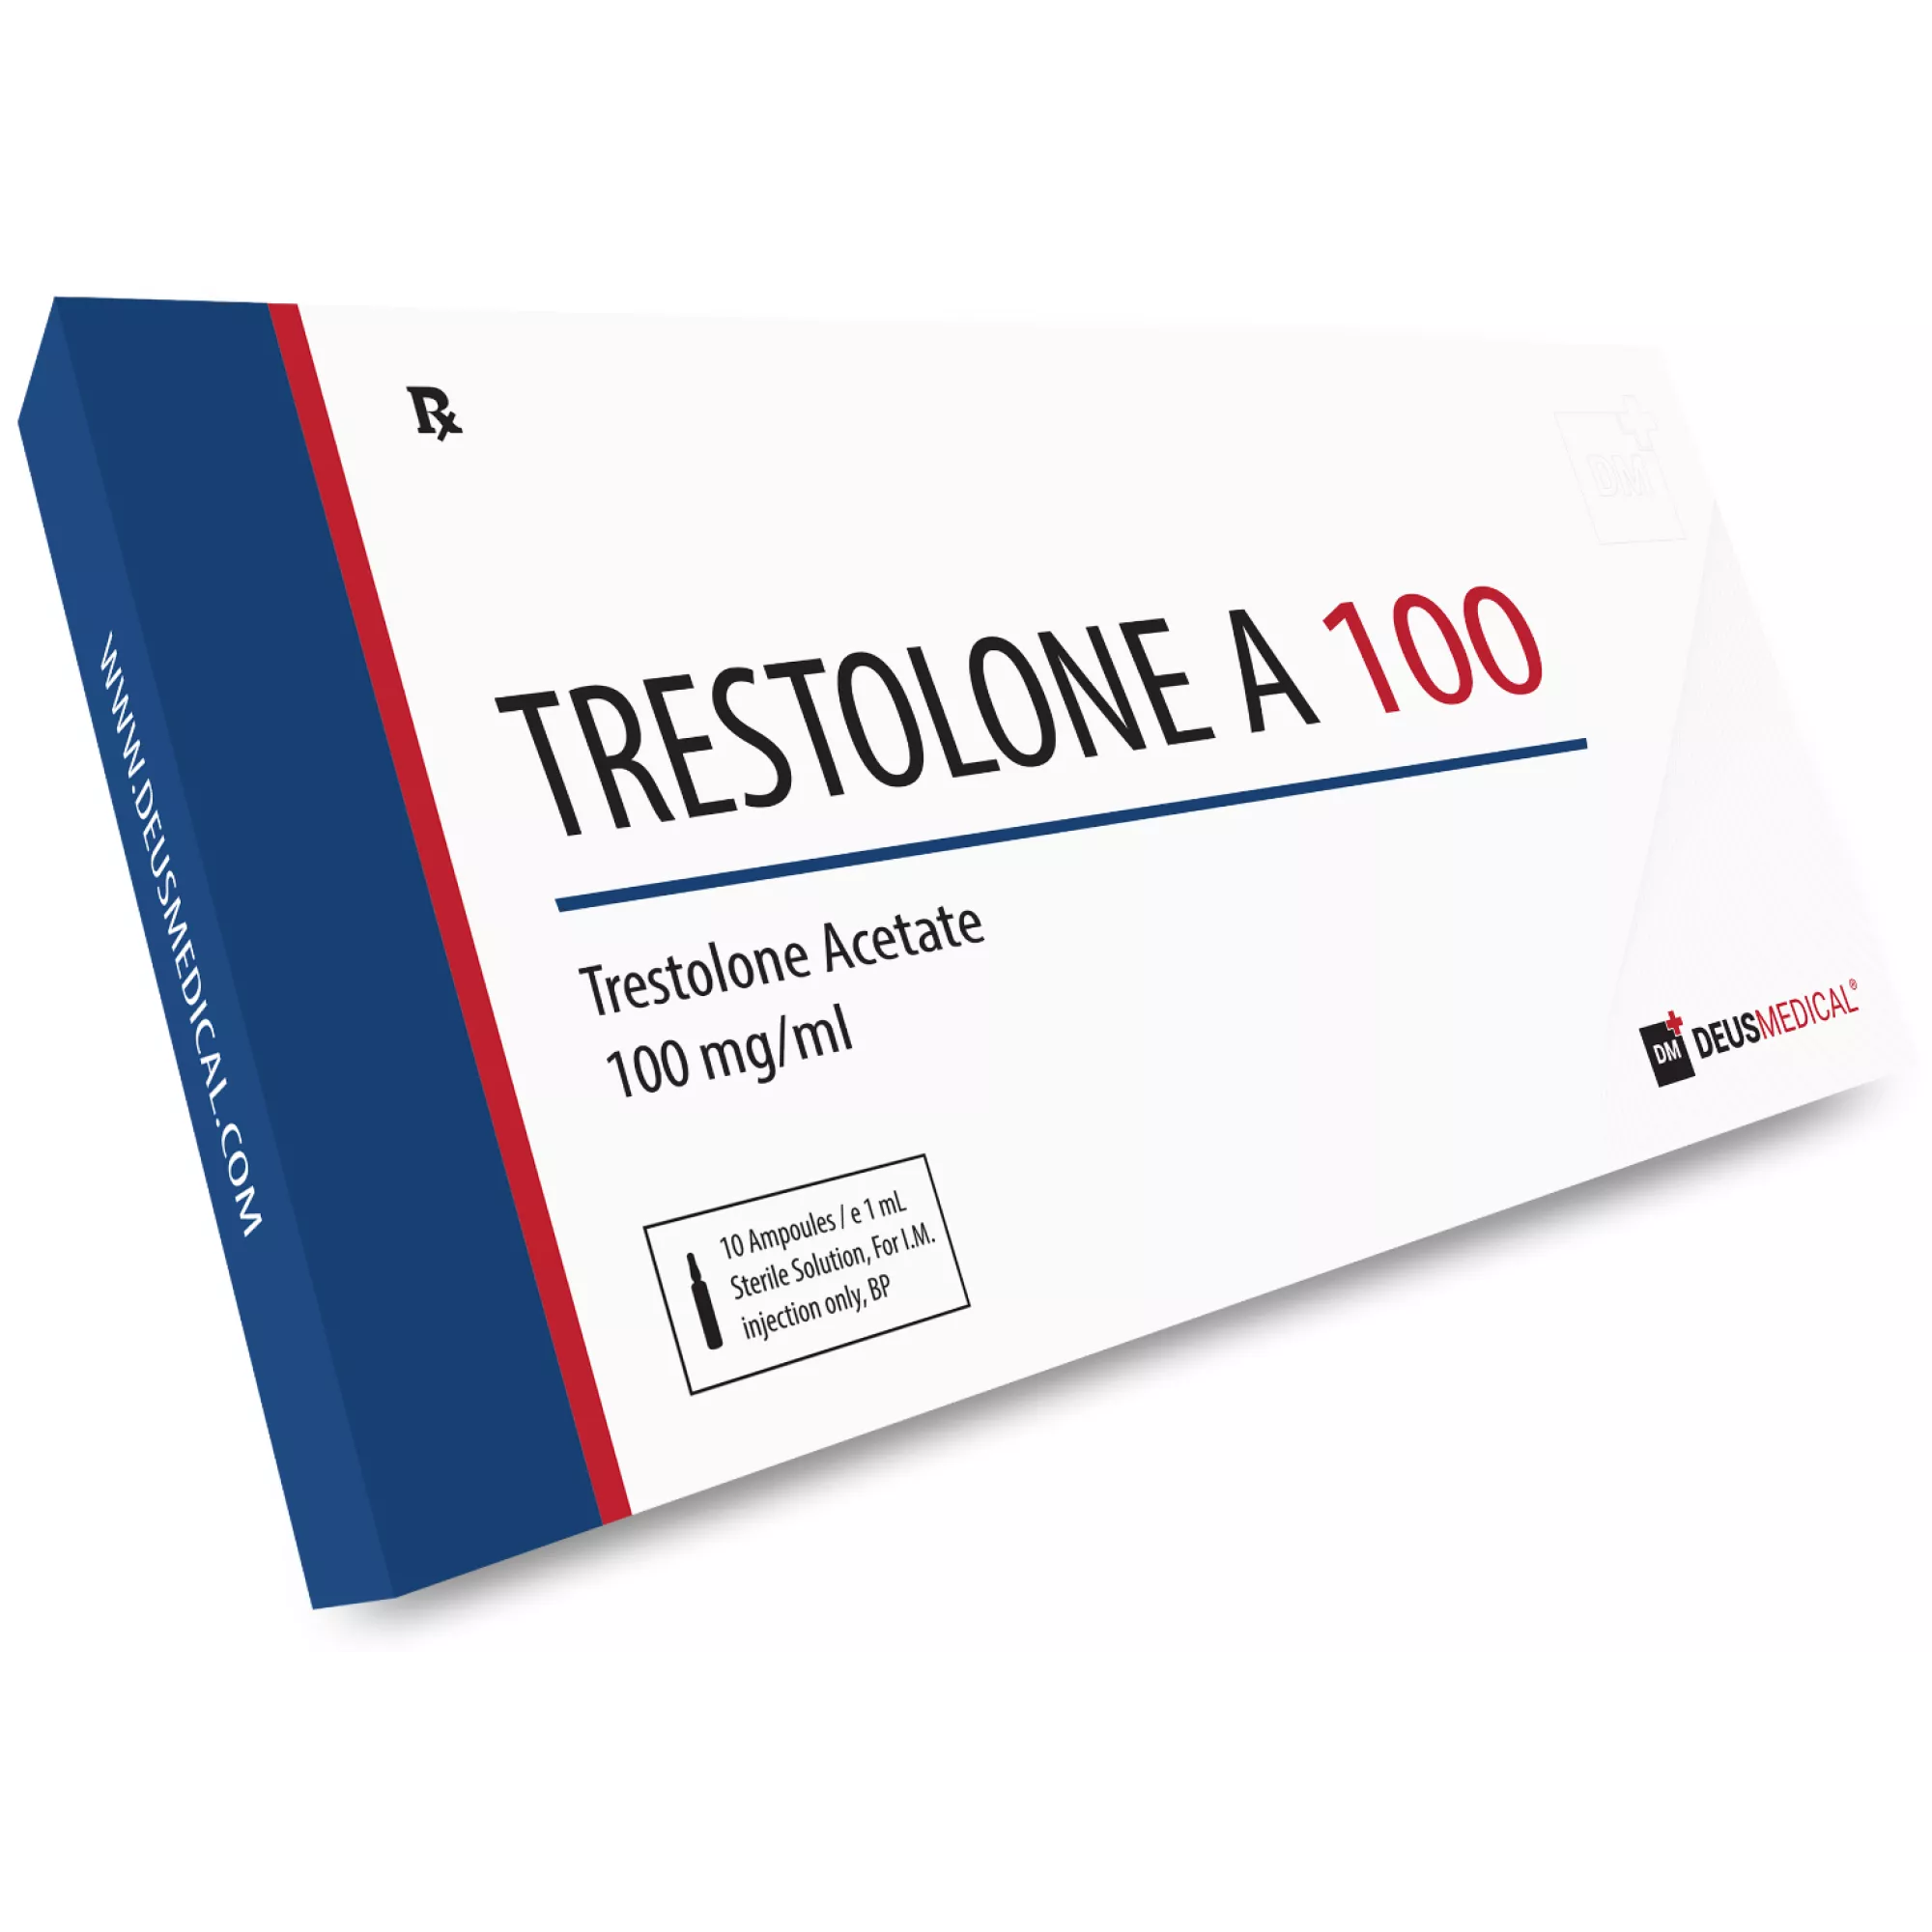 TRESTOLONE A 100 (Trestolone Acetate), Deus Medical, Buy Steroids Online - www.deuspower.shop